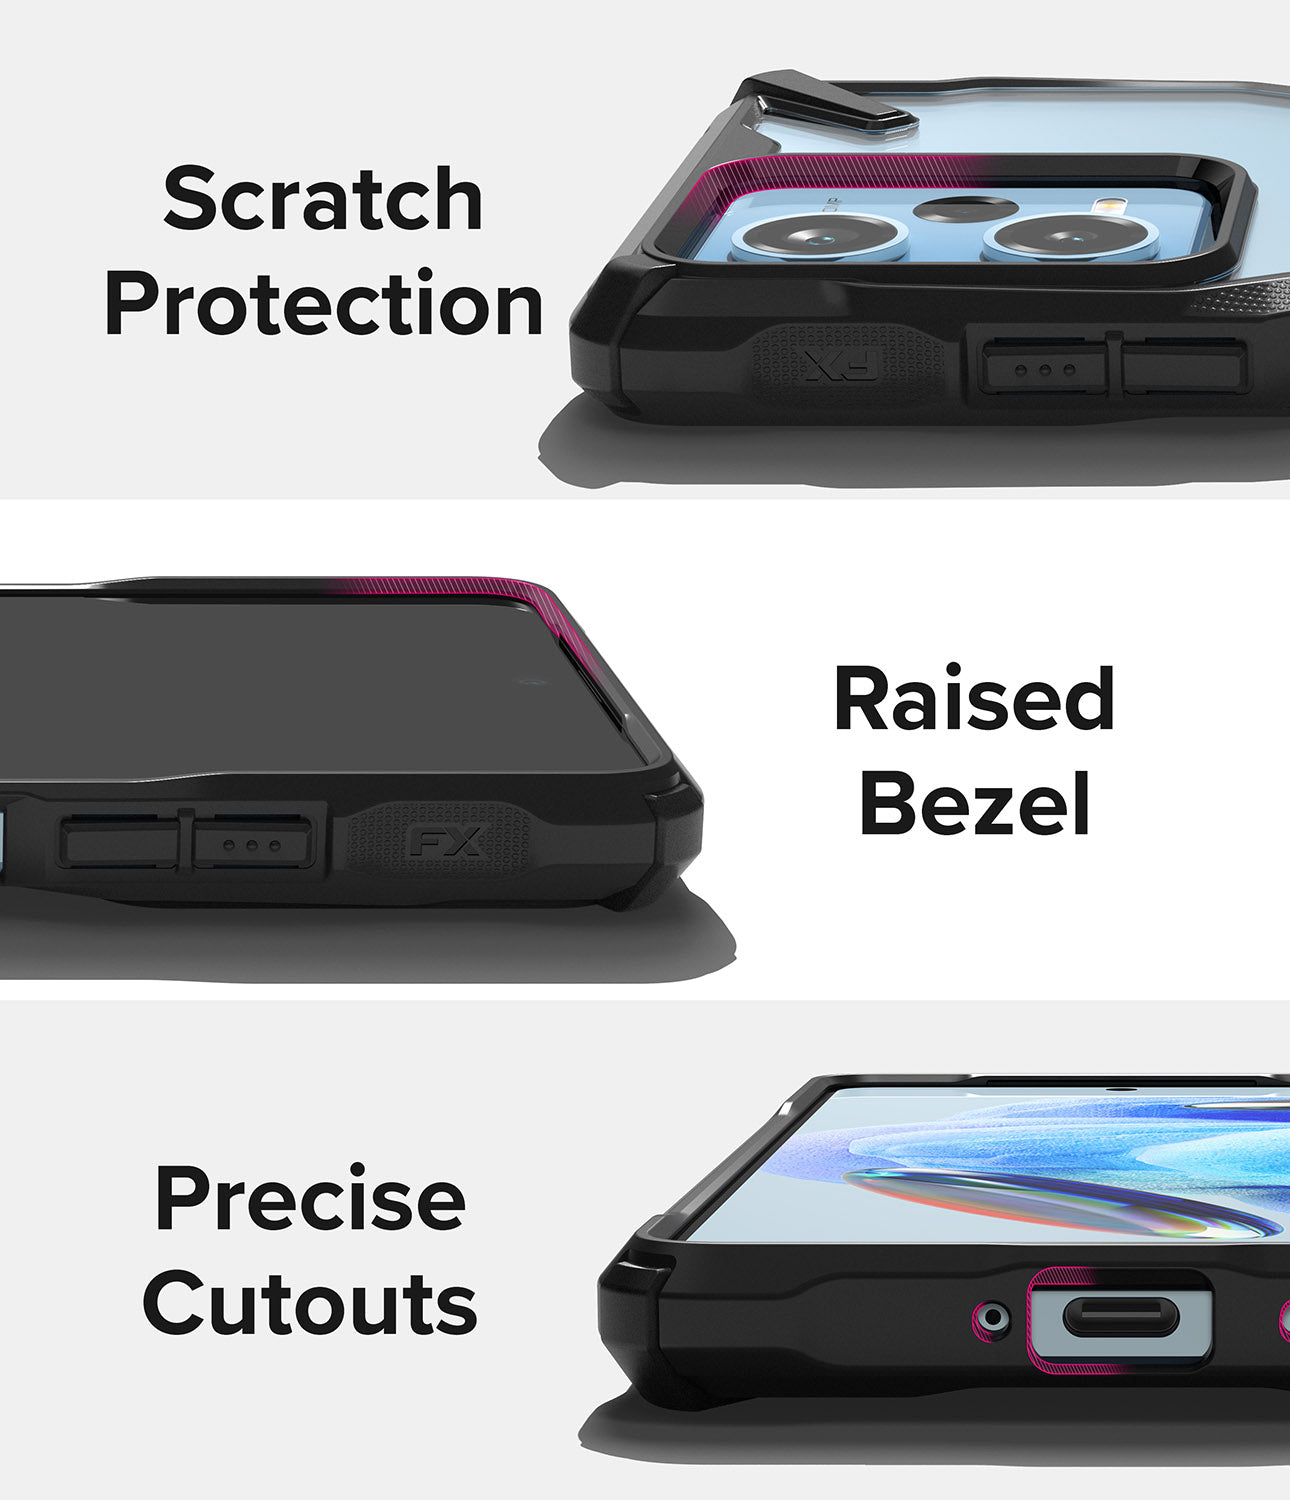 Scratch Protection, Raised Bezel, Precise Cutouts